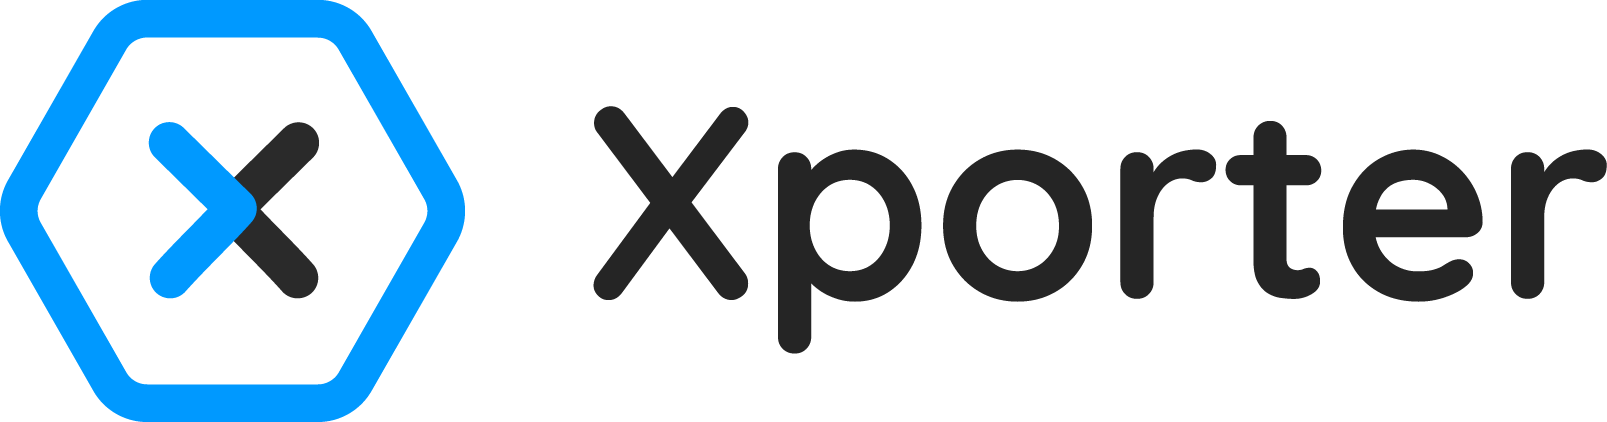 Login | Xporter Identity logo